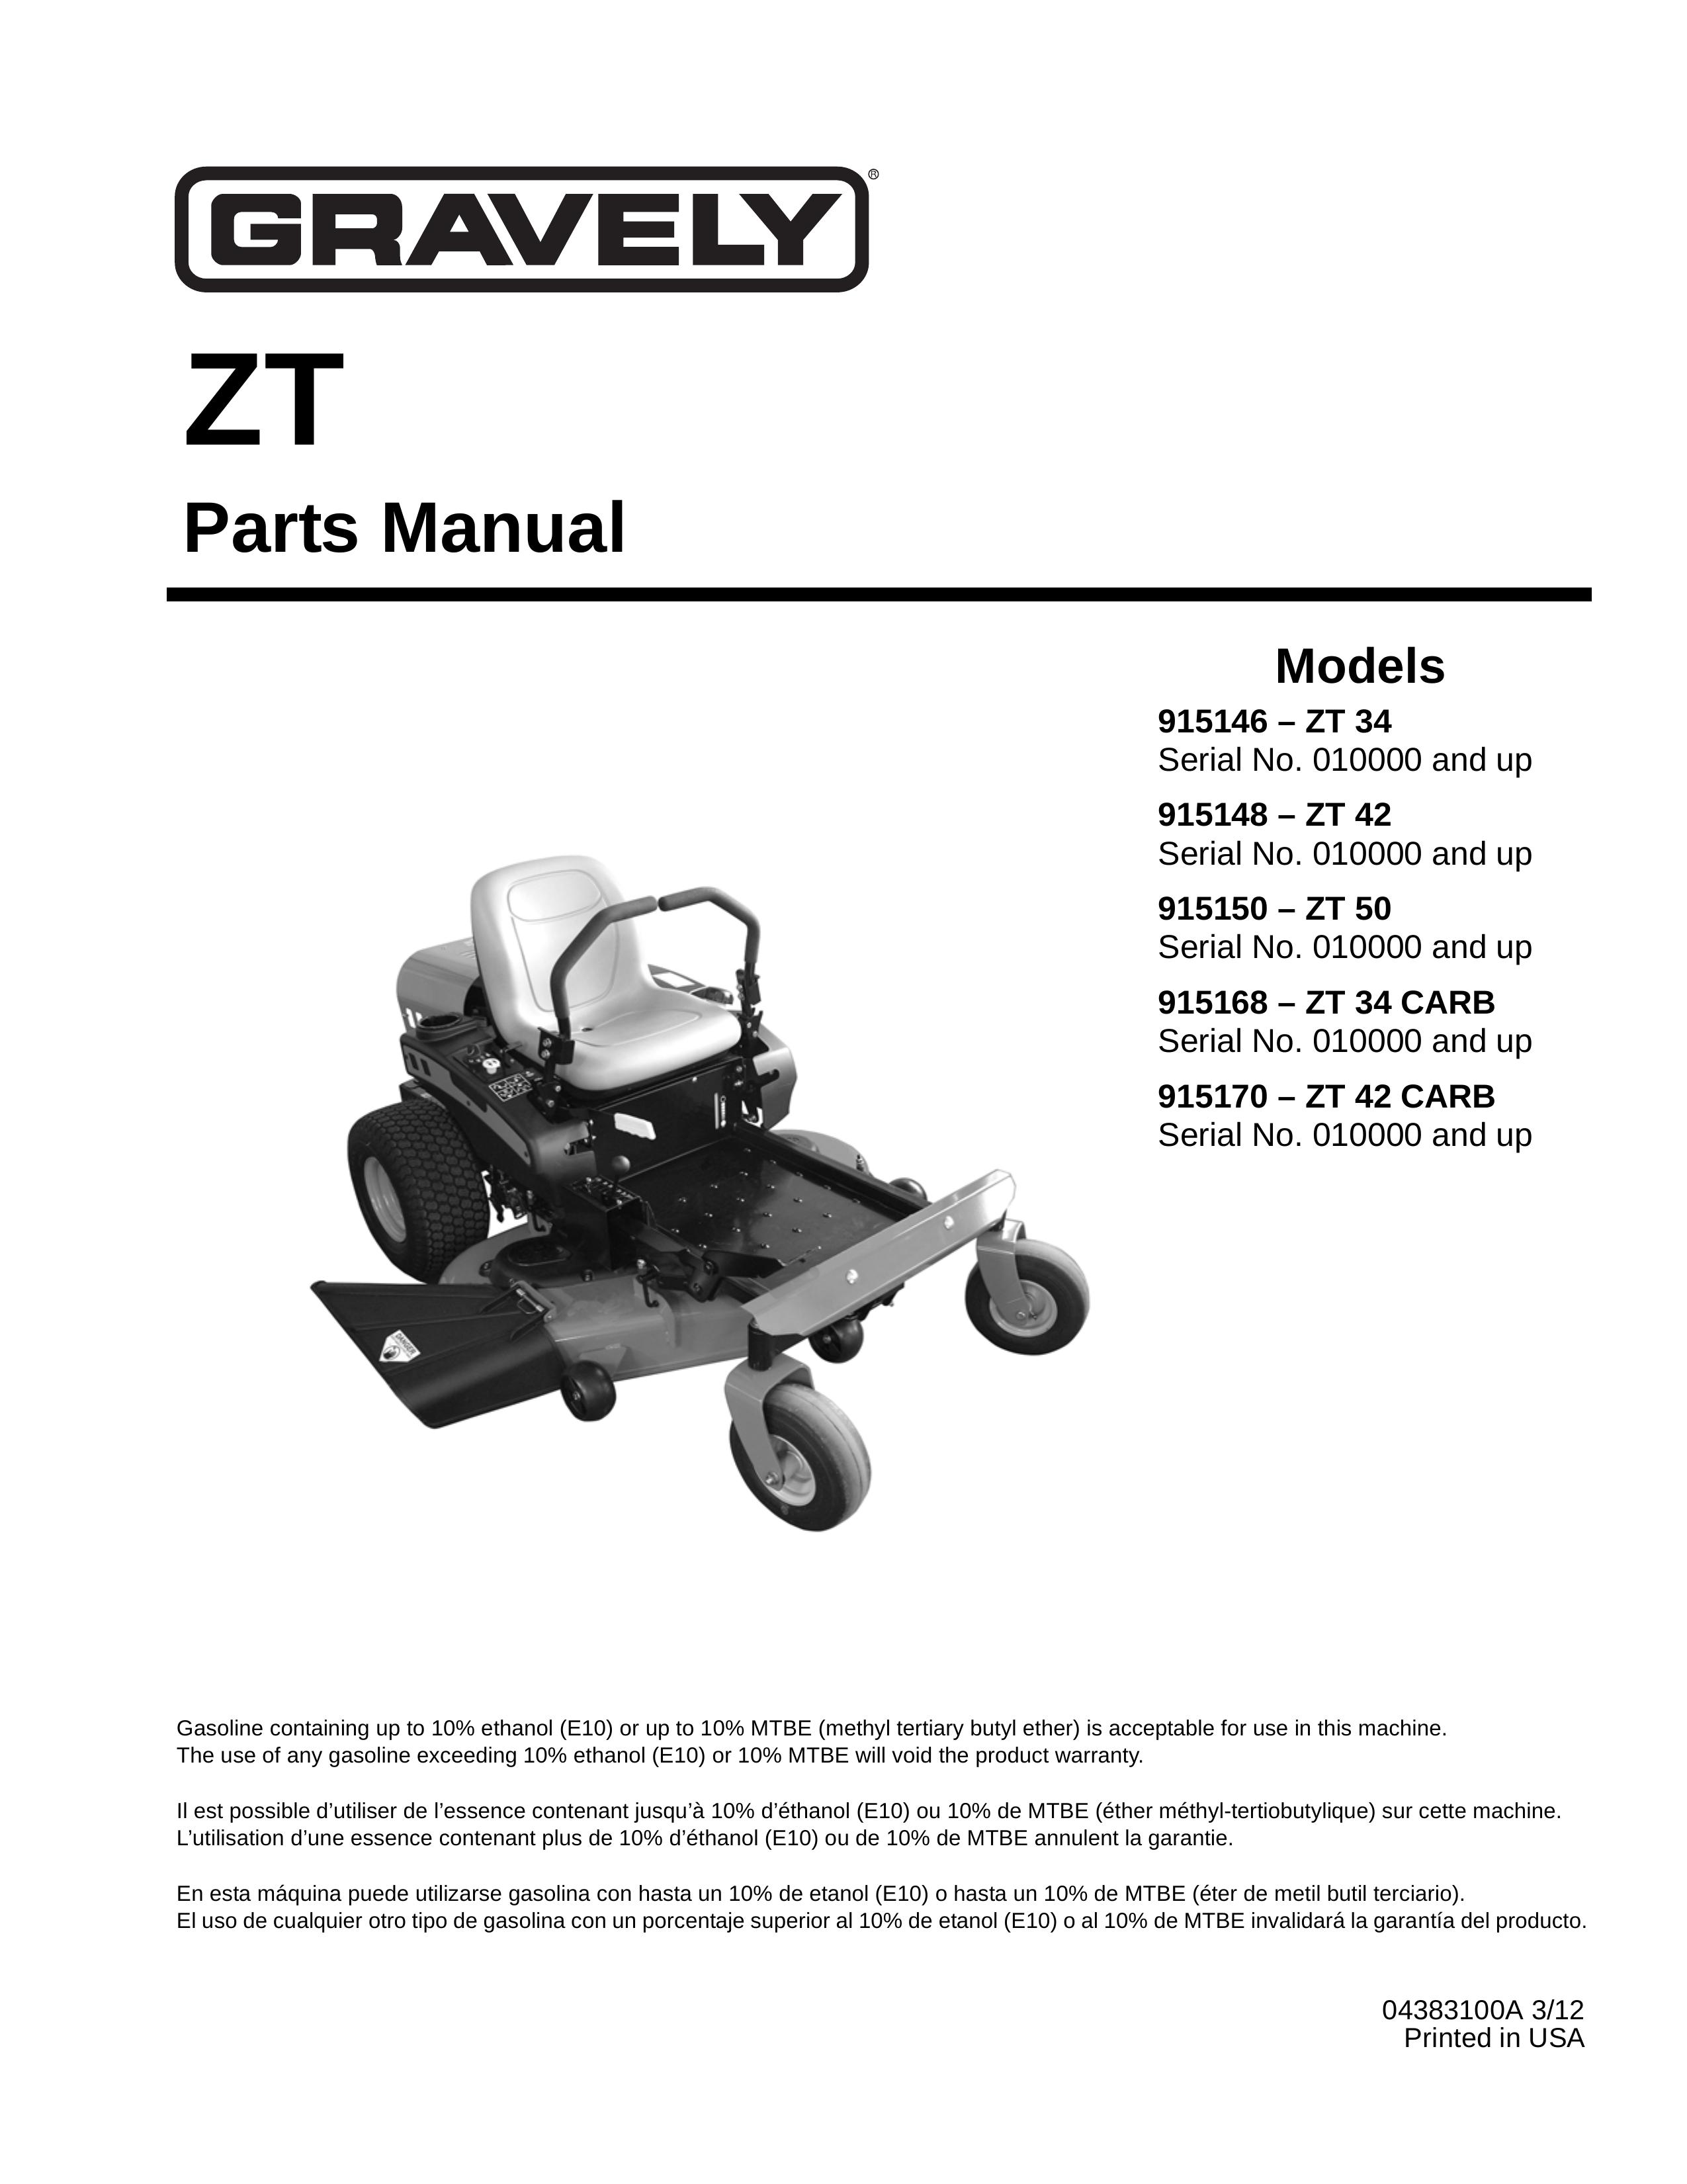 Gravely 915170 Lawn Mower User Manual